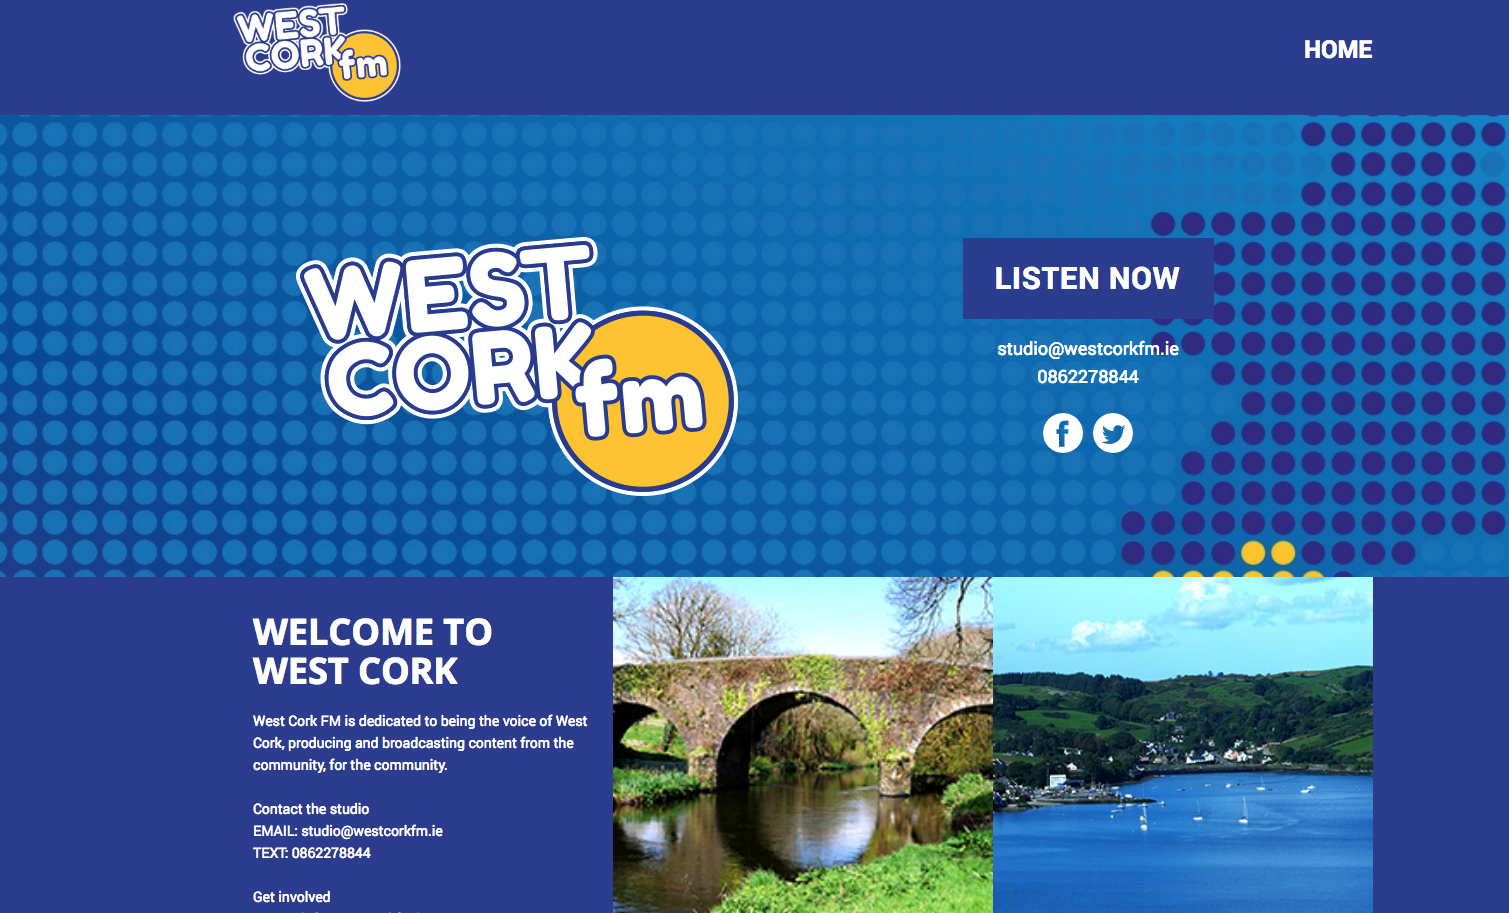 WestCork FM is born